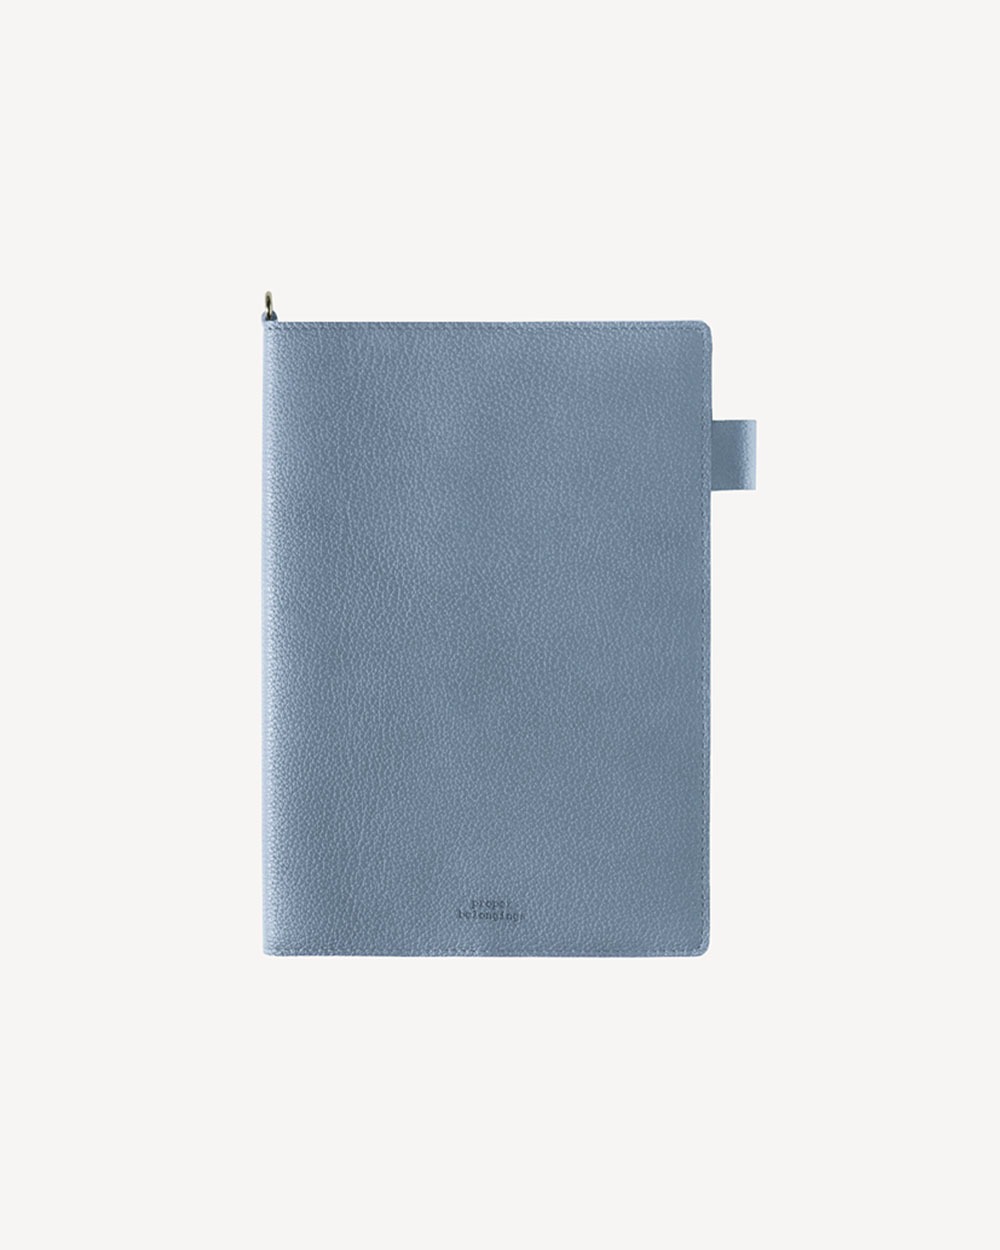 Proper Leather Cover (B6) / Fog blue